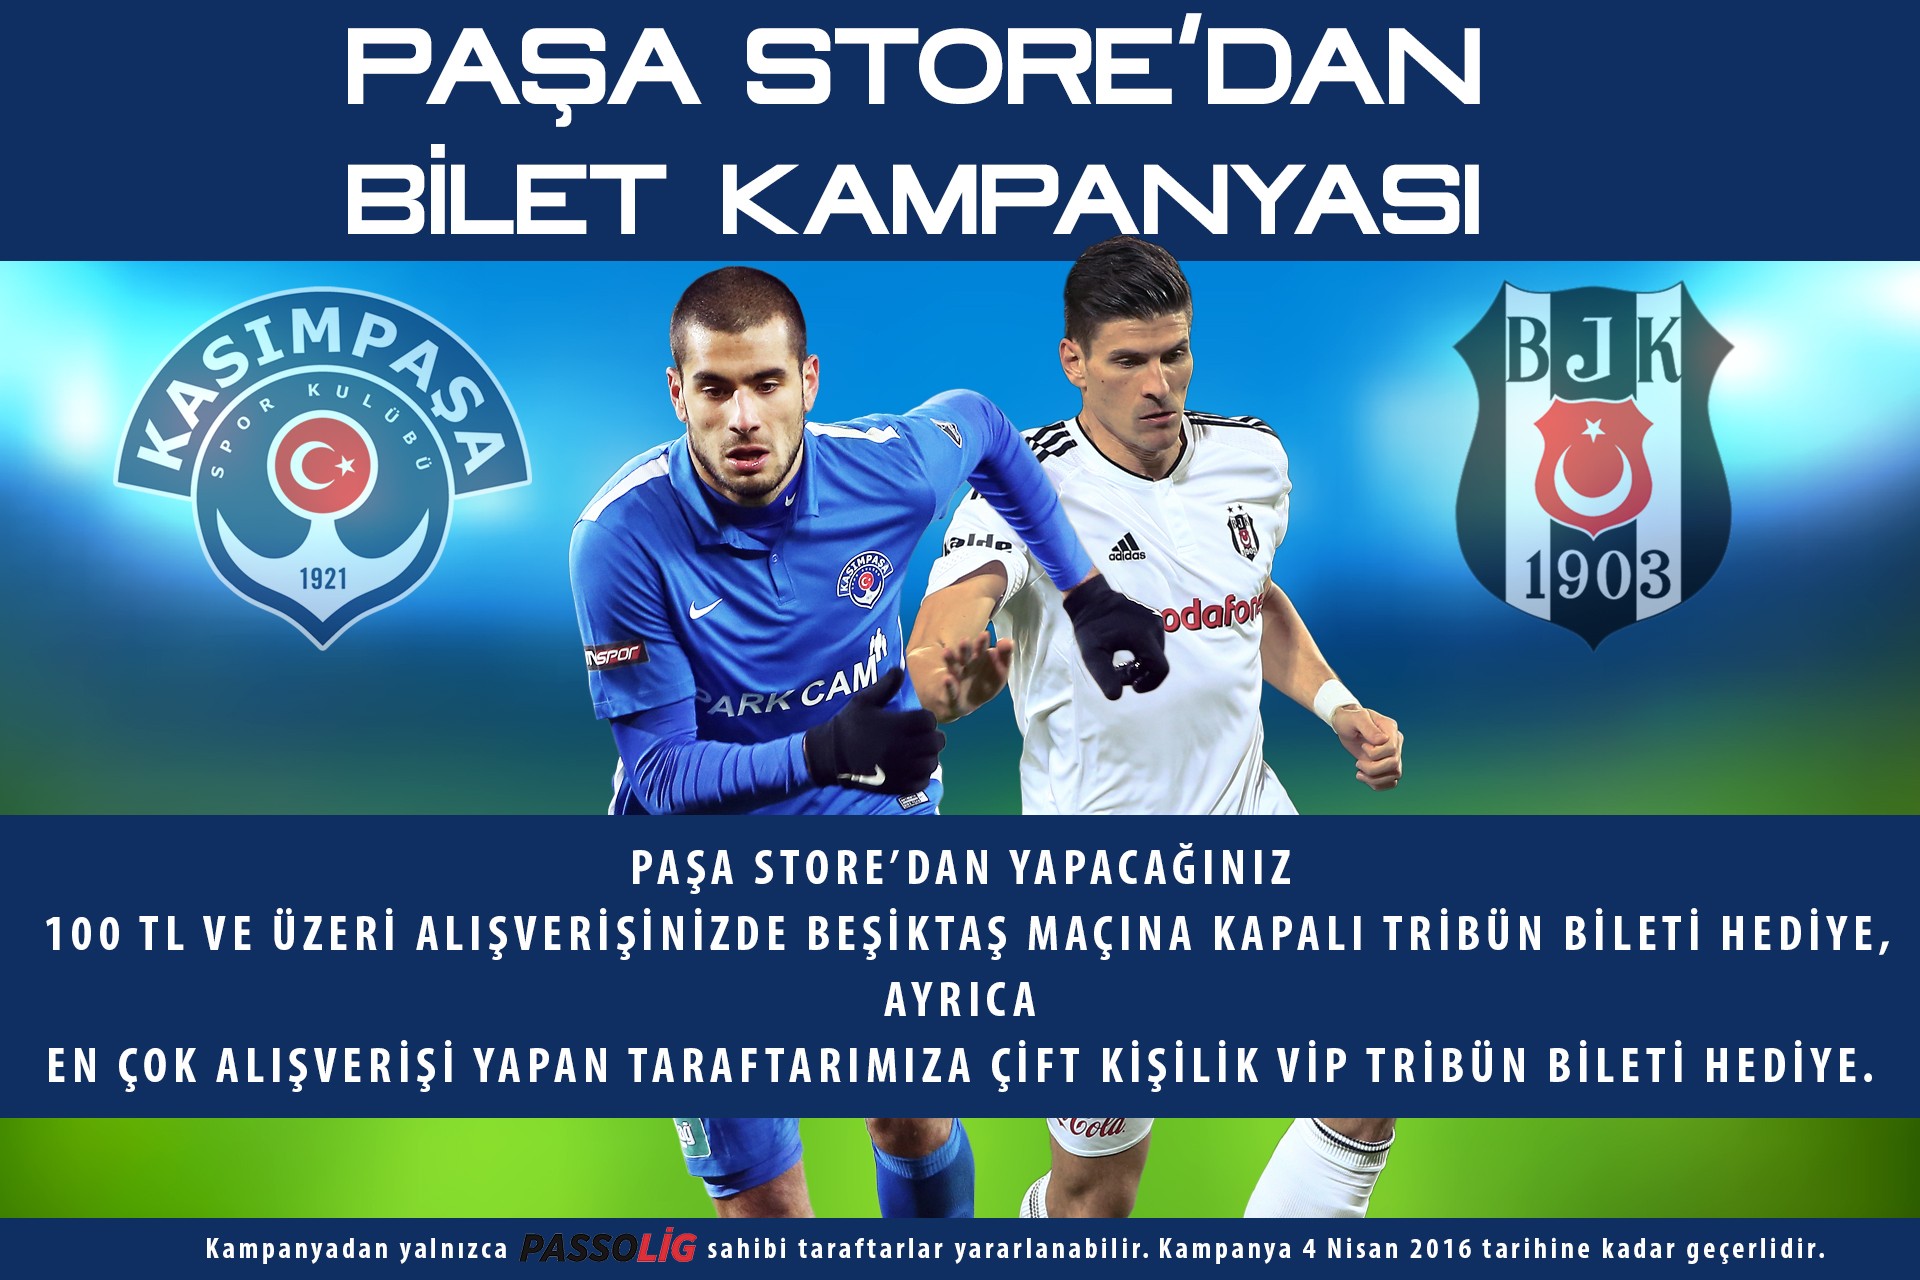 Paşa Store’dan bilet kampanyası